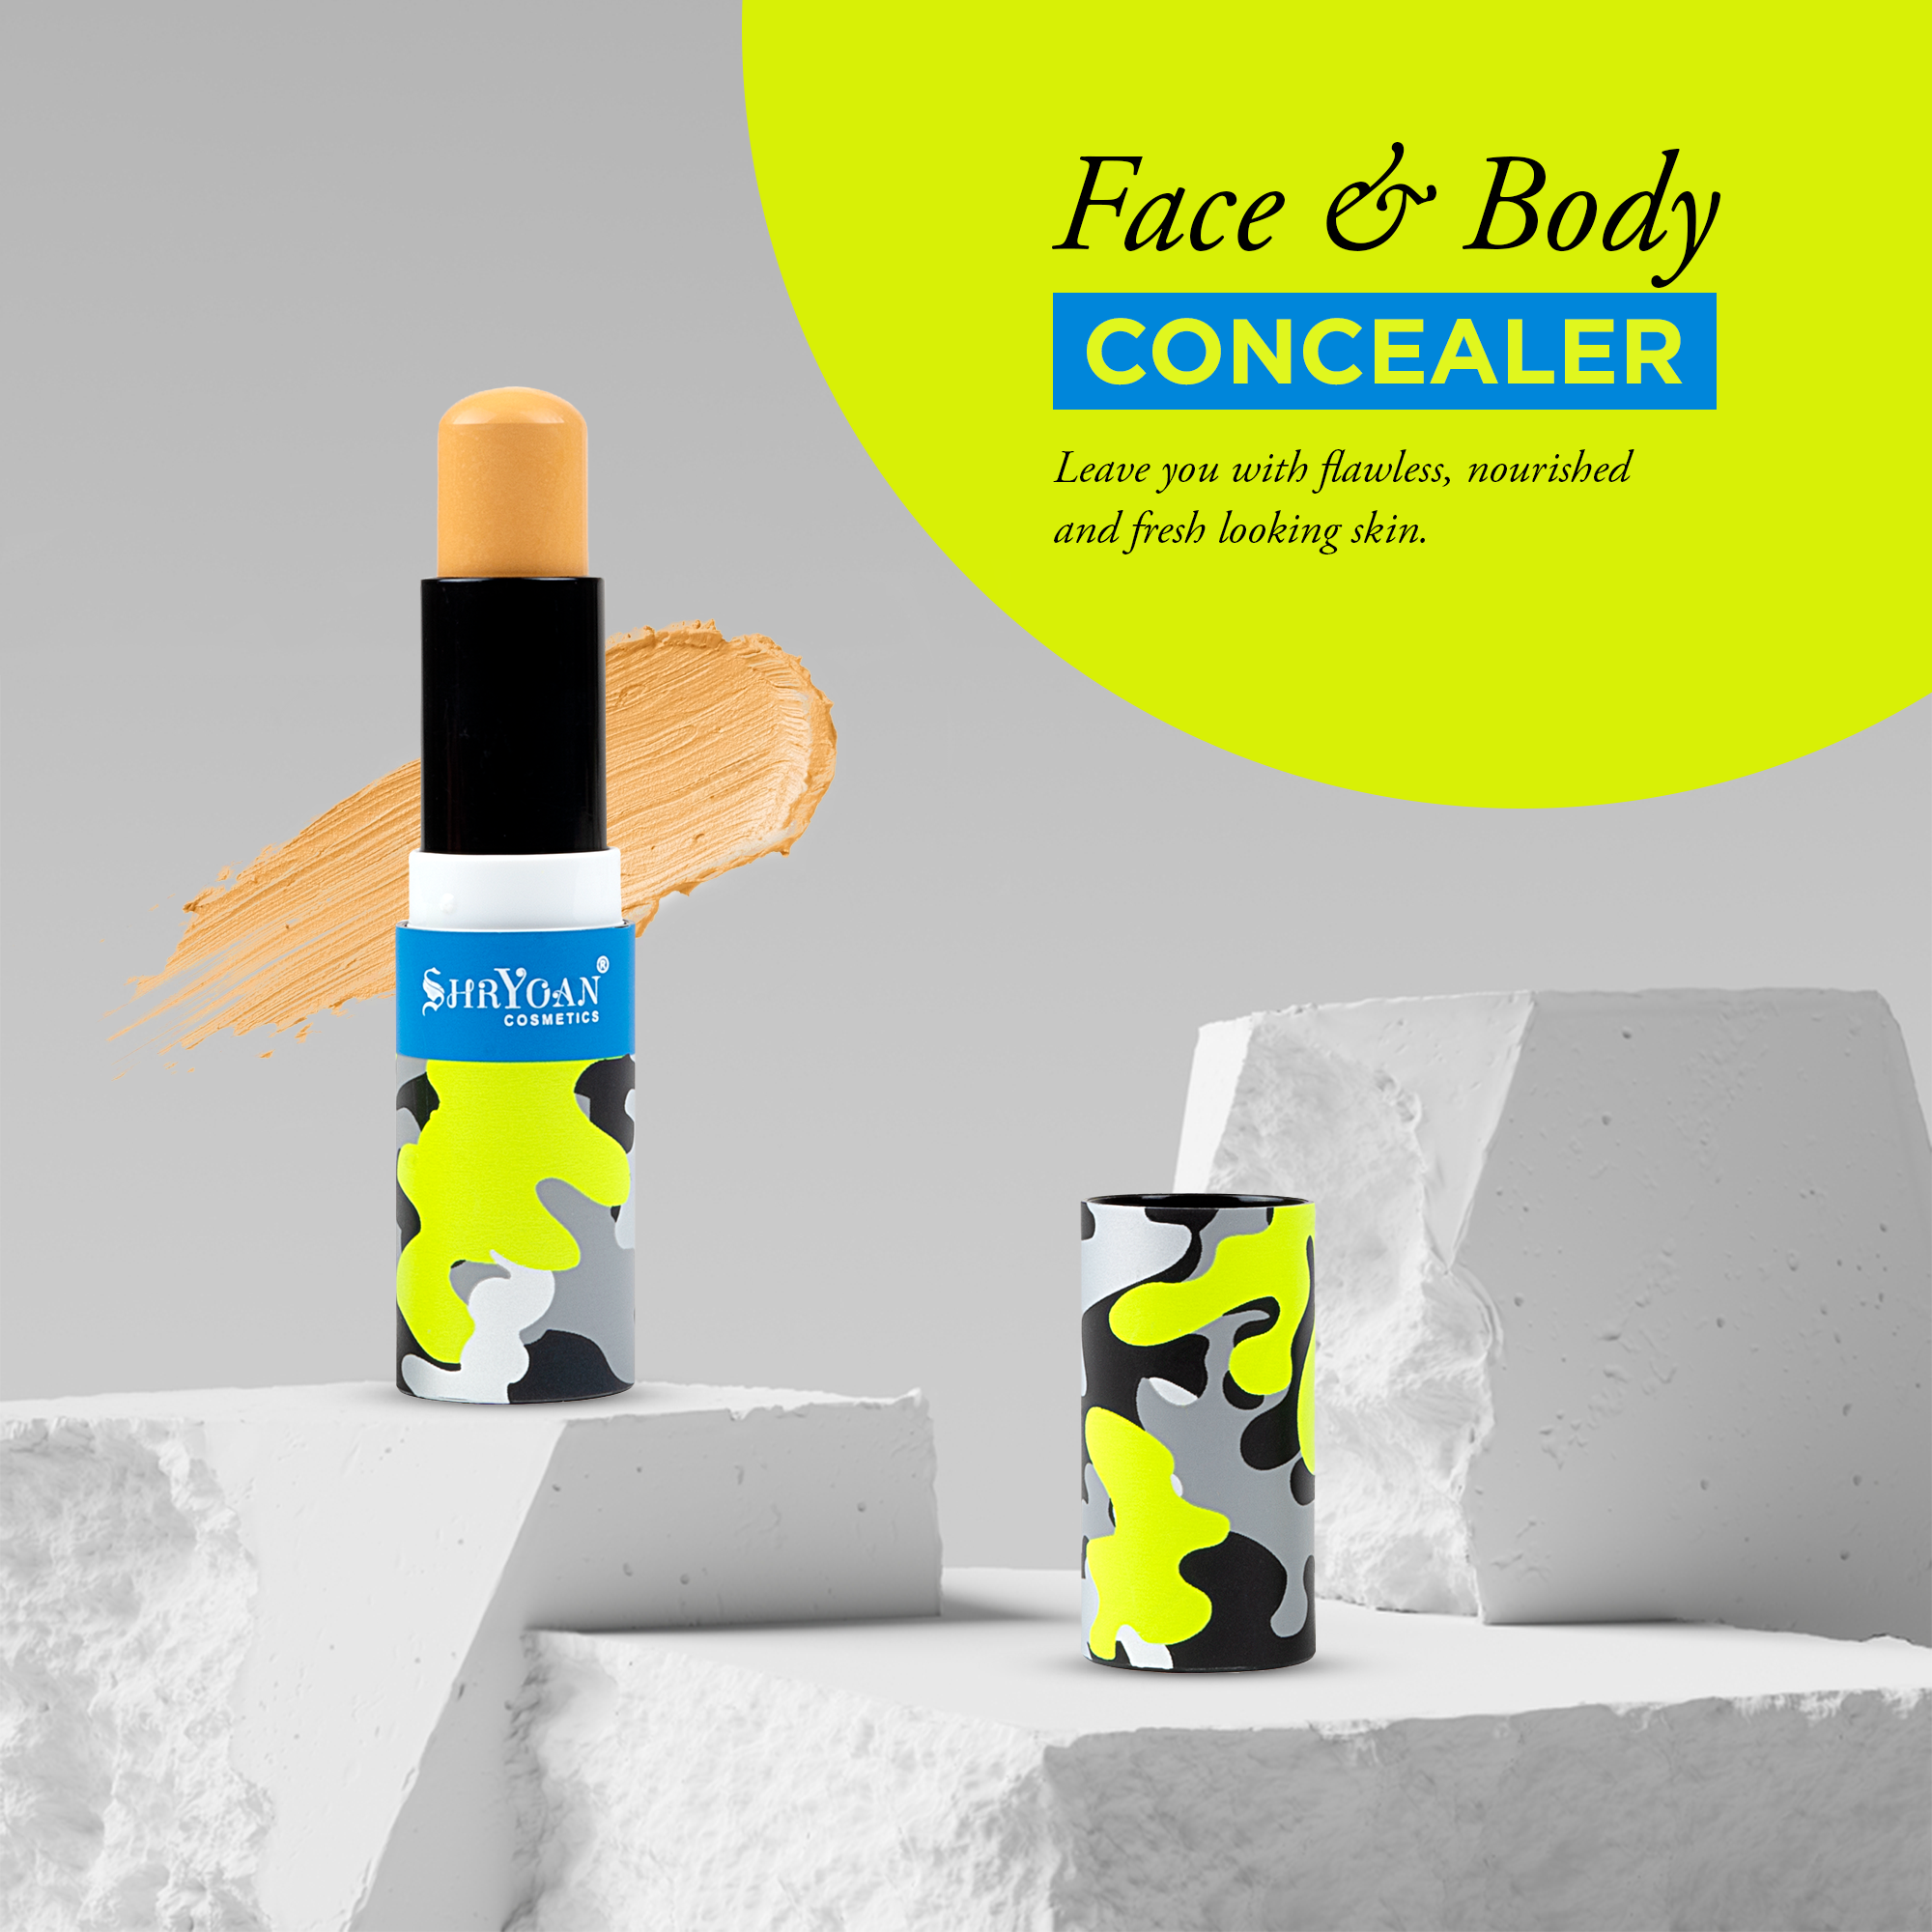 Shryoan Face & Body Concealer